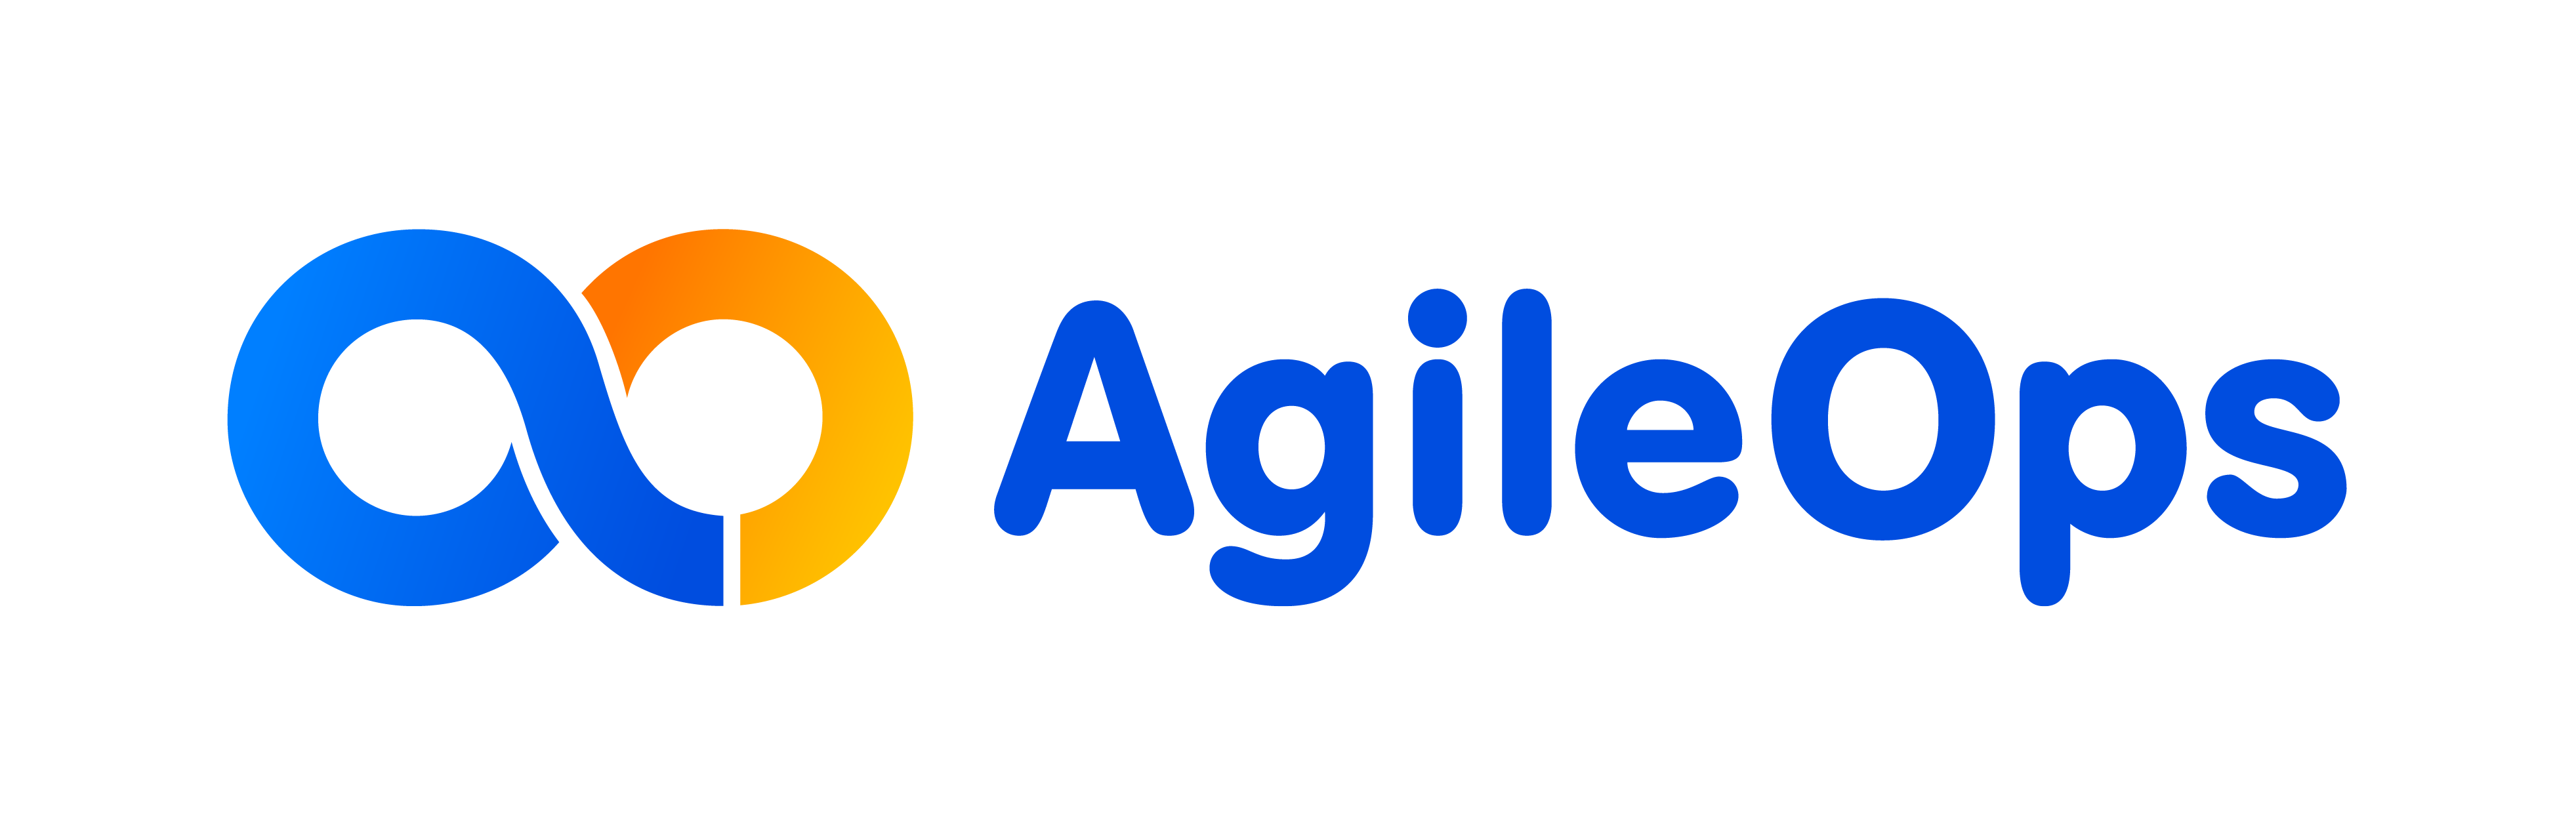 AgileOps logo